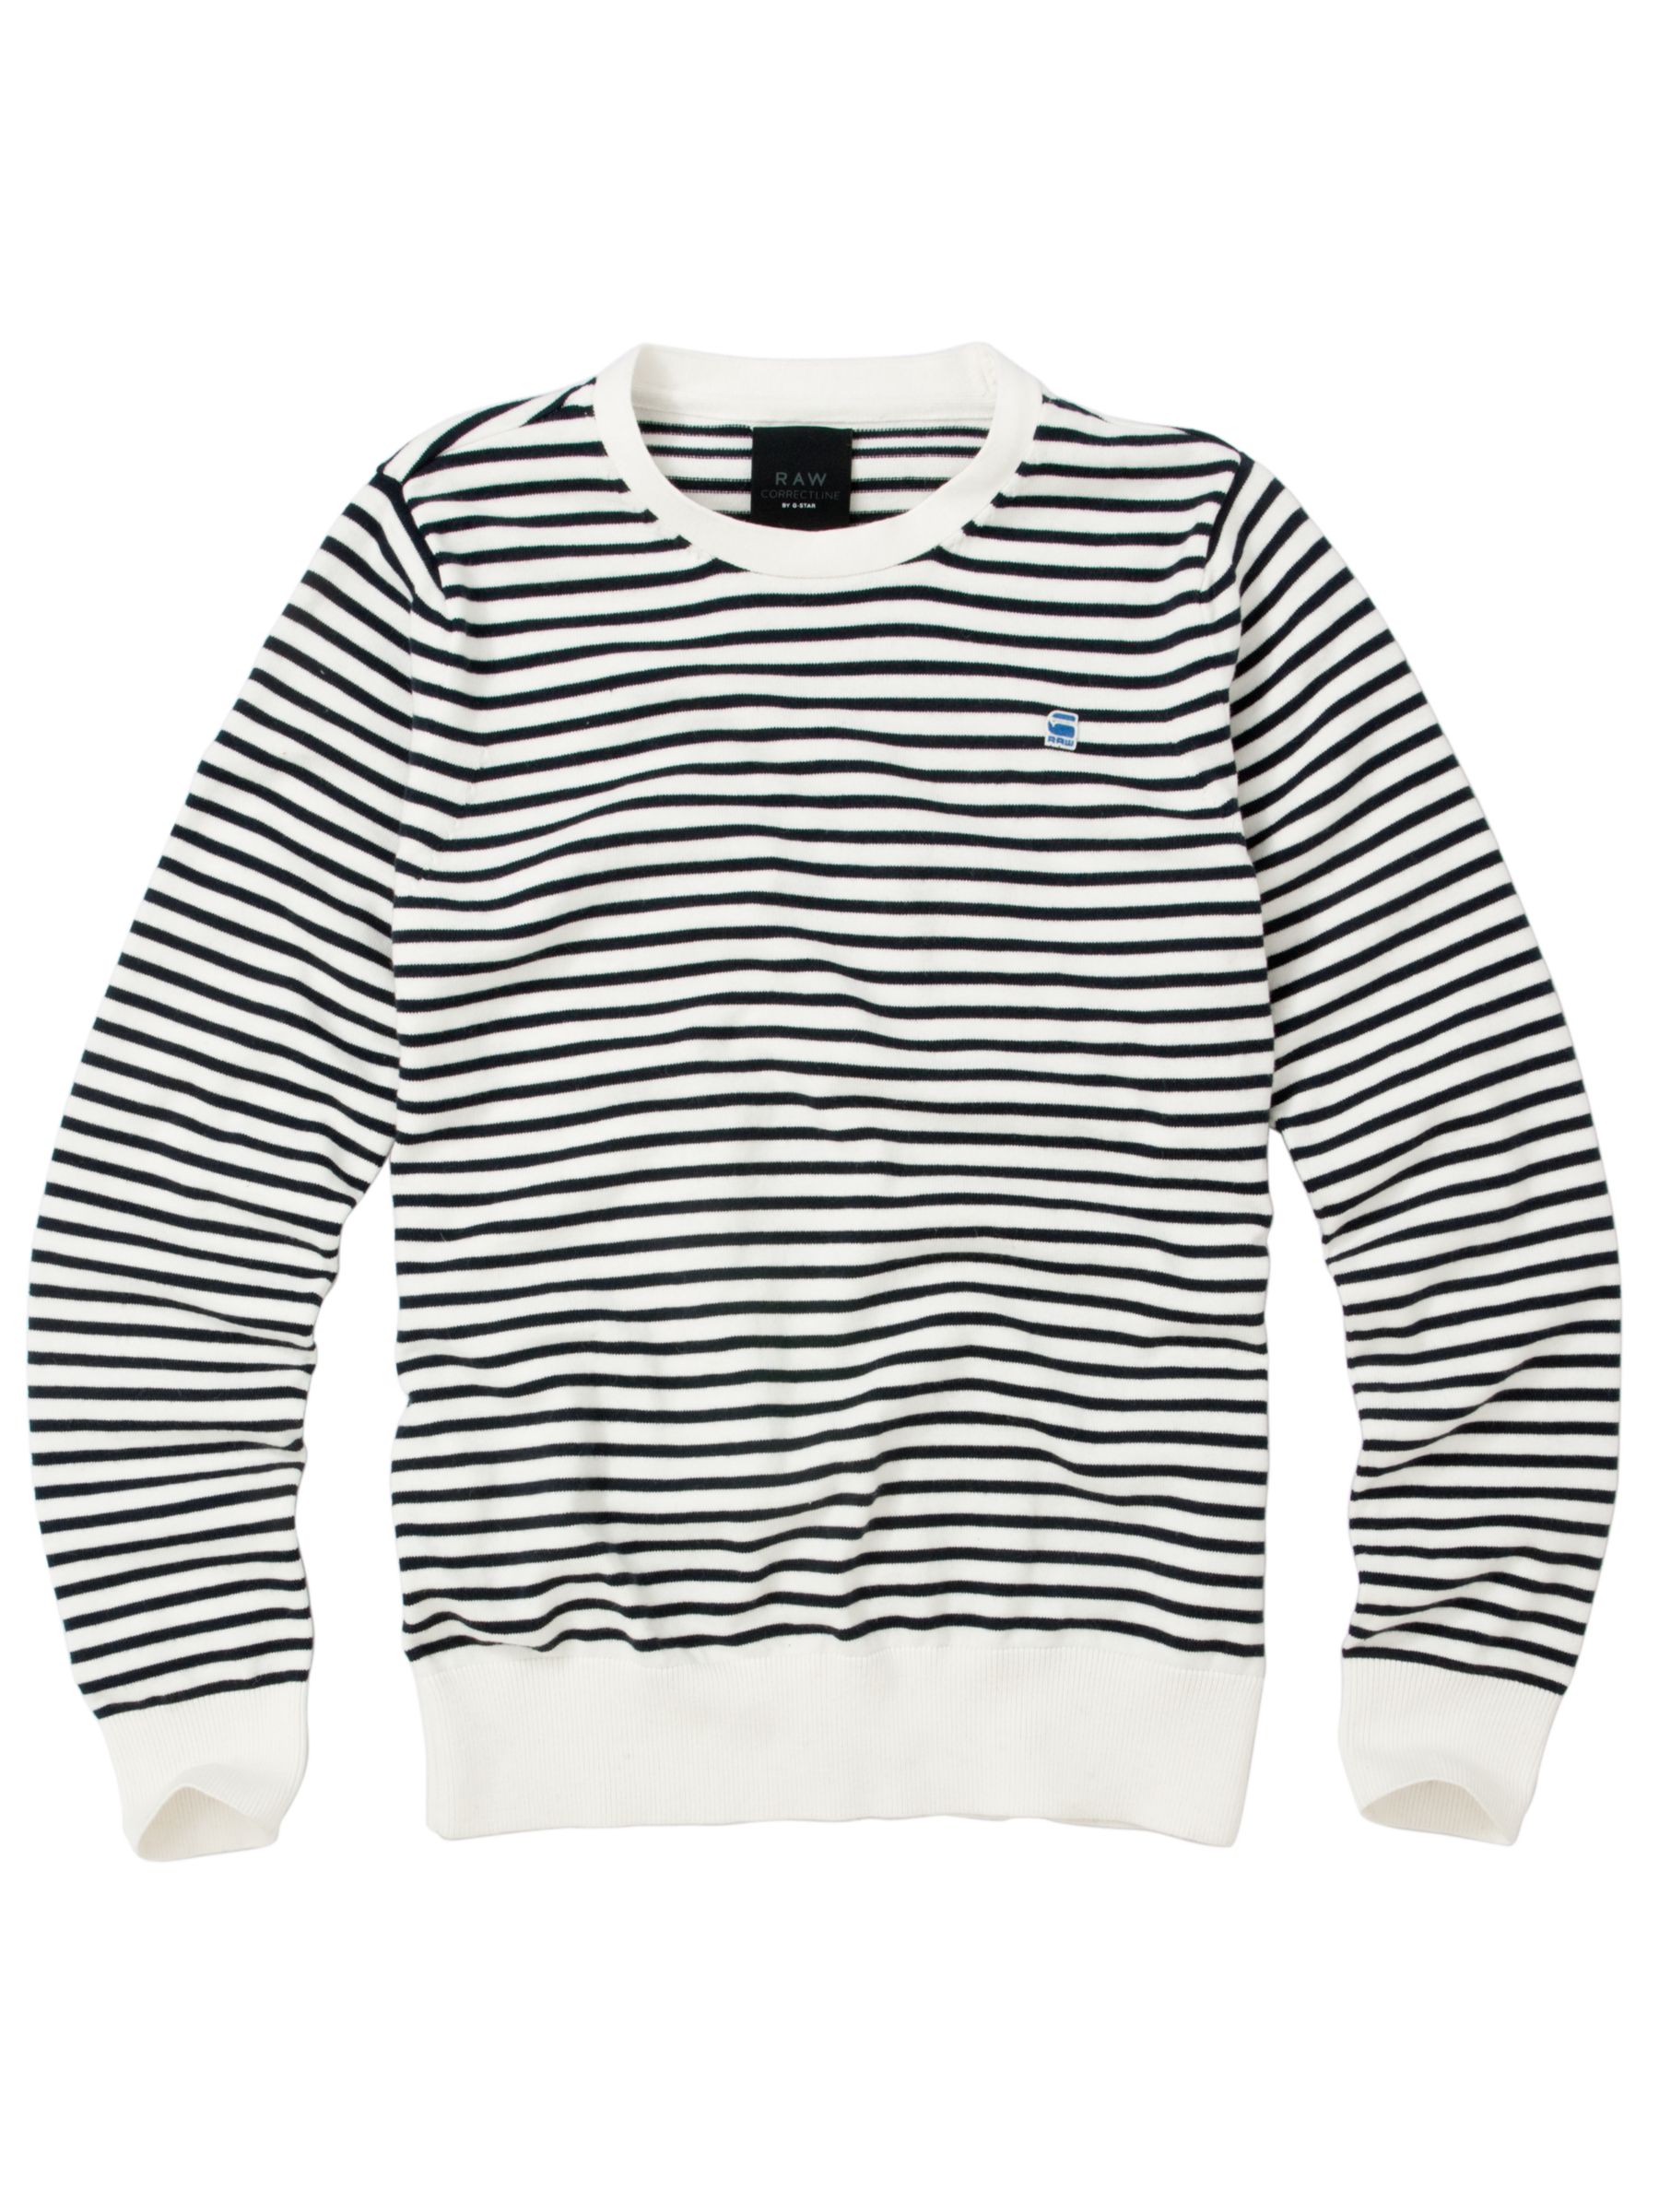 Breton Stripe Crew-Neck T-Shirt,